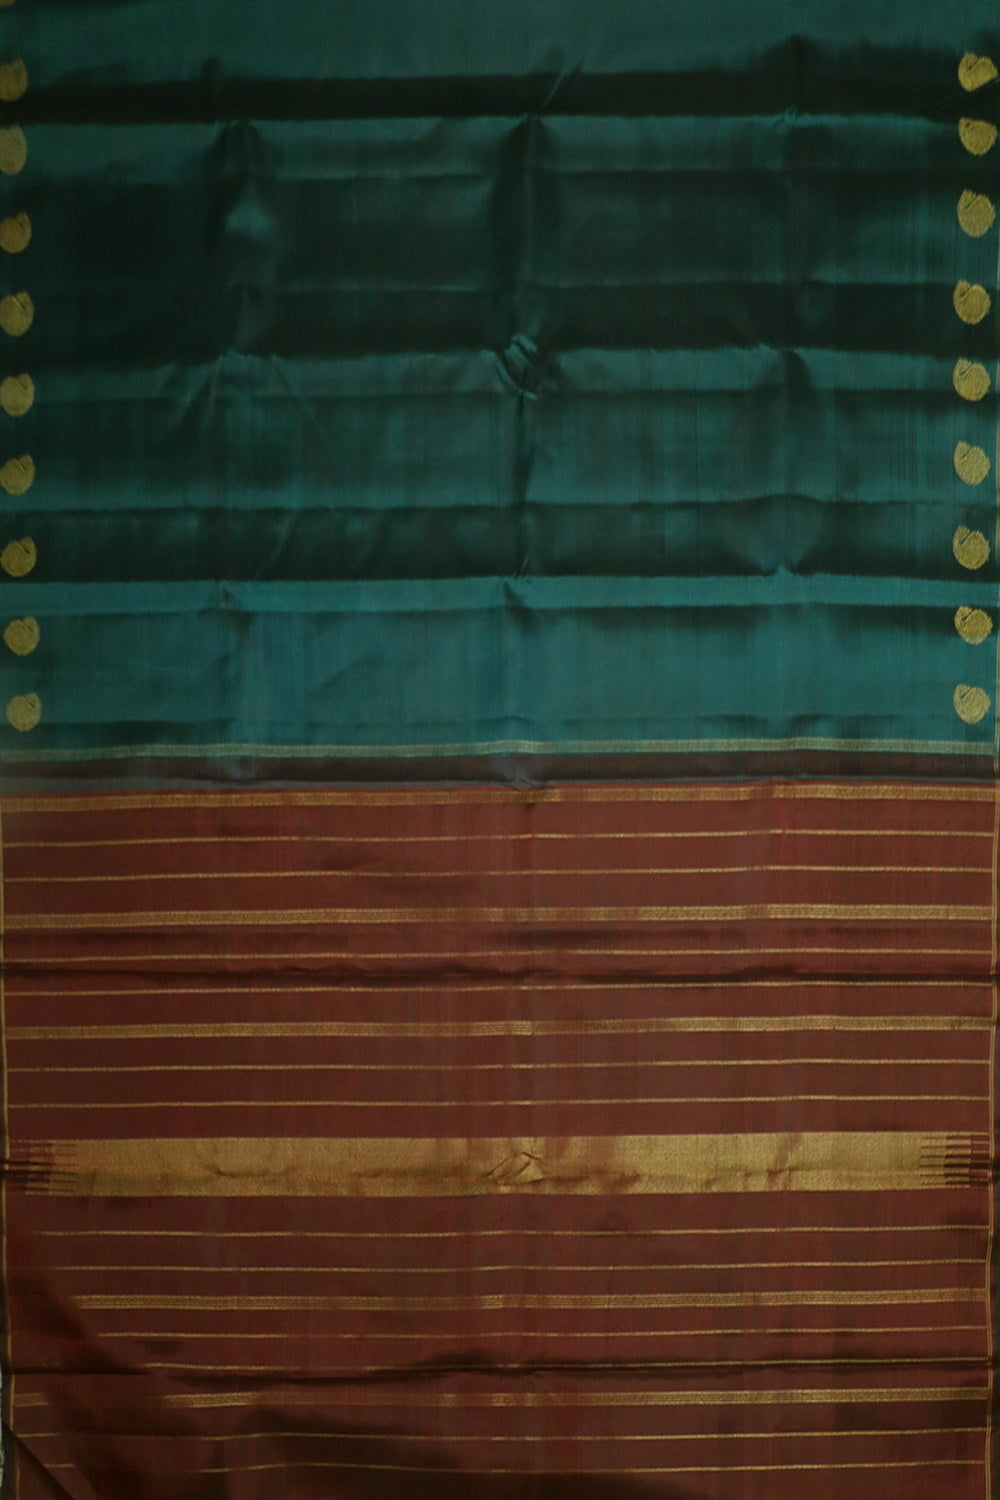 Bluish Green Kanchipuram Silk Saree